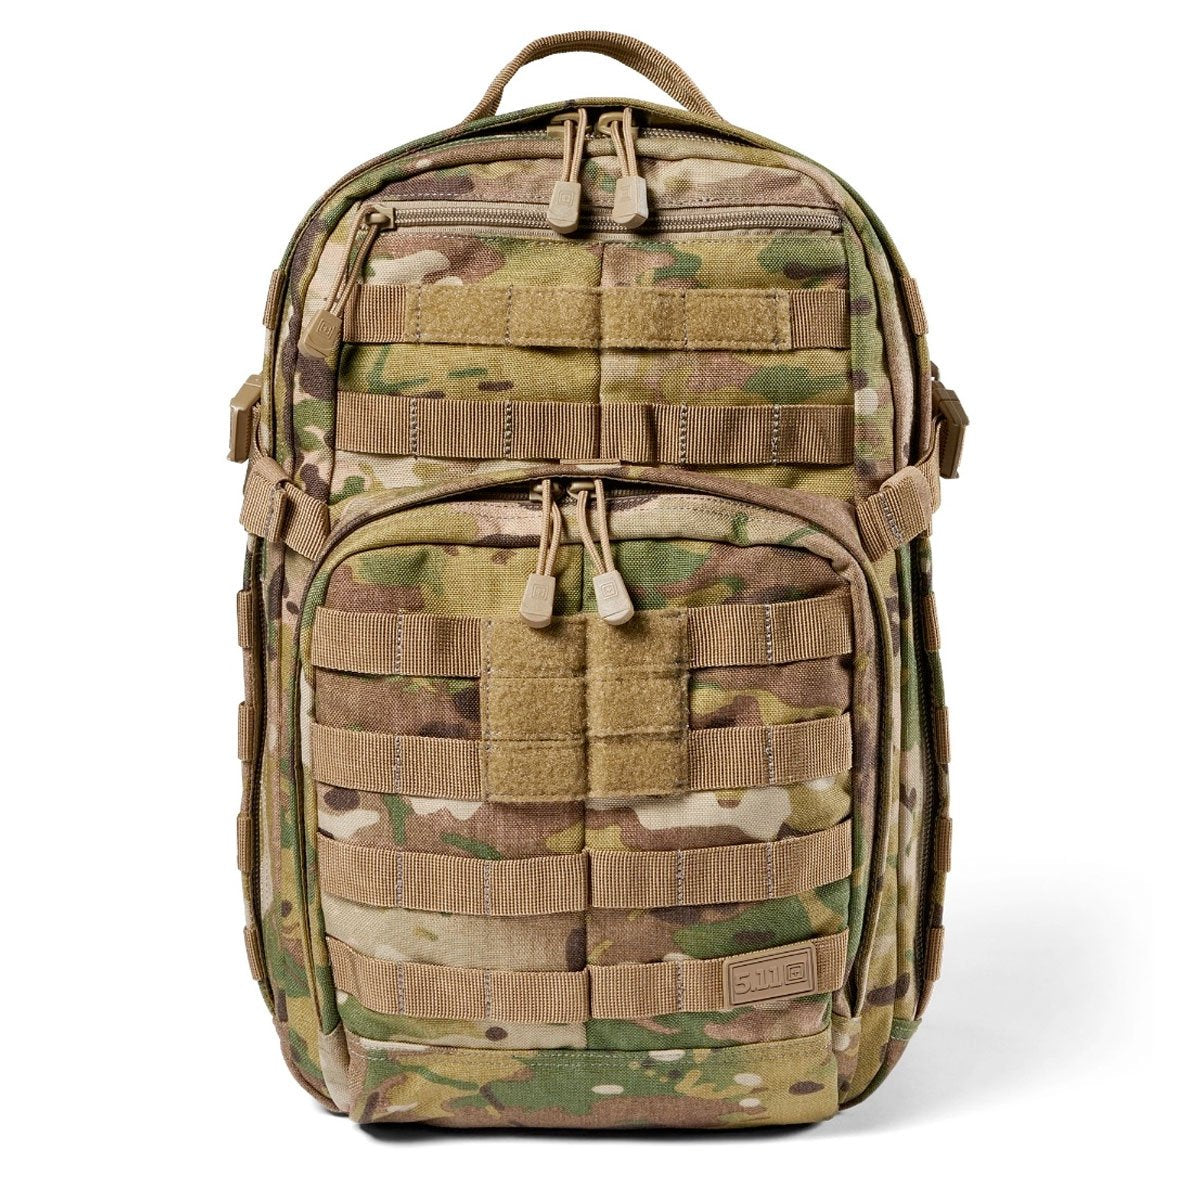 5.11 Tactical Rush 12 Backpack 2.0 Multicam Bags, Packs and Cases 5.11 Tactical Tactical Gear Supplier Tactical Distributors Australia